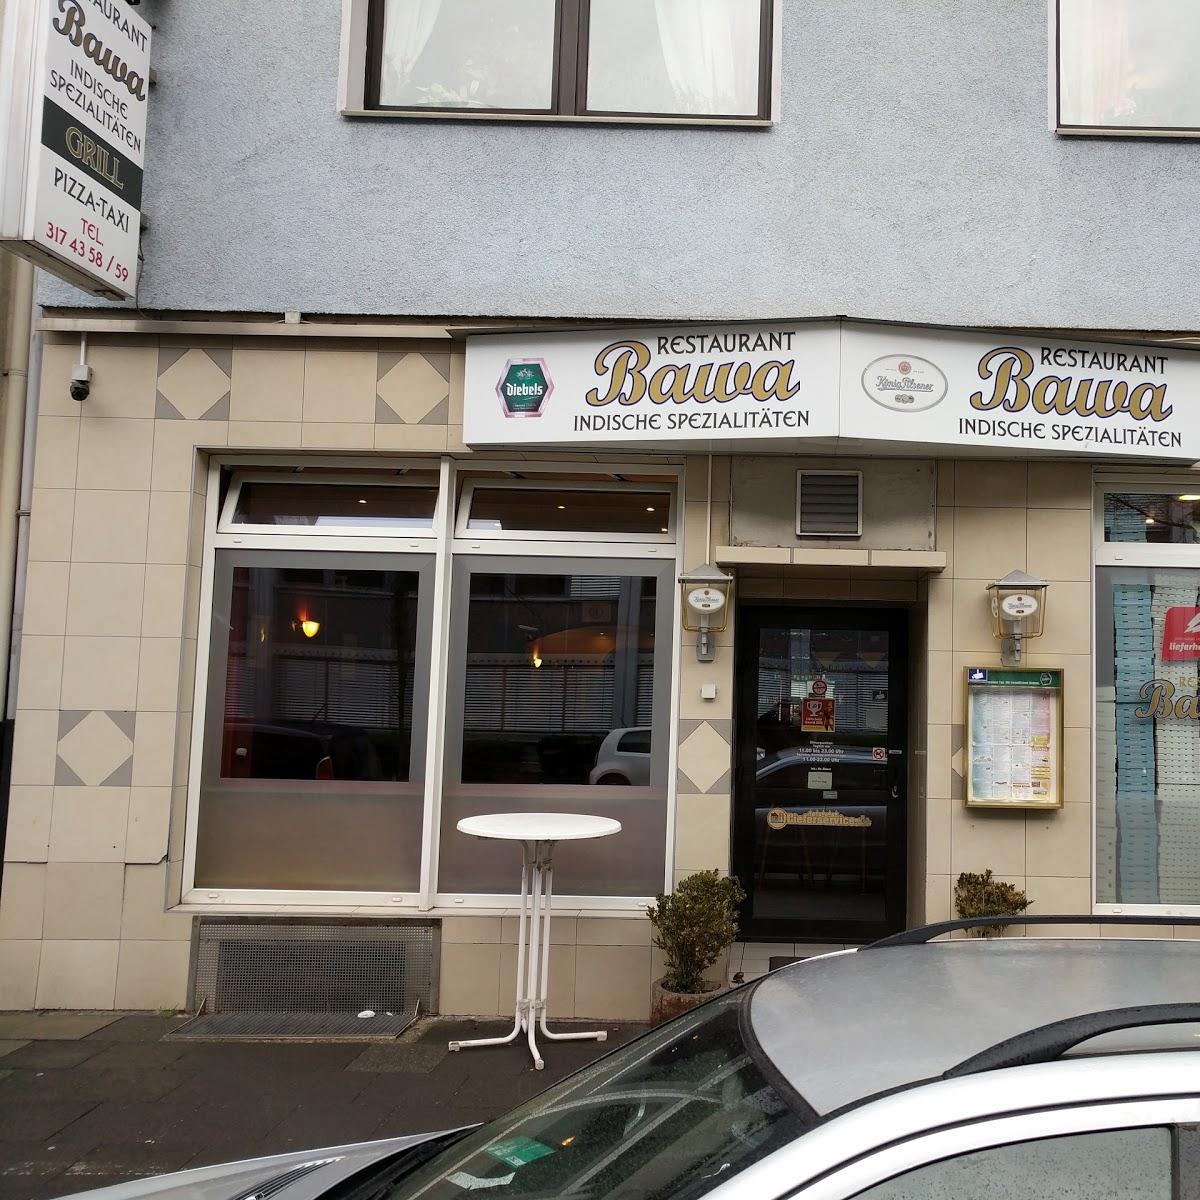 Restaurant "Bawa Restaurant" in Duisburg